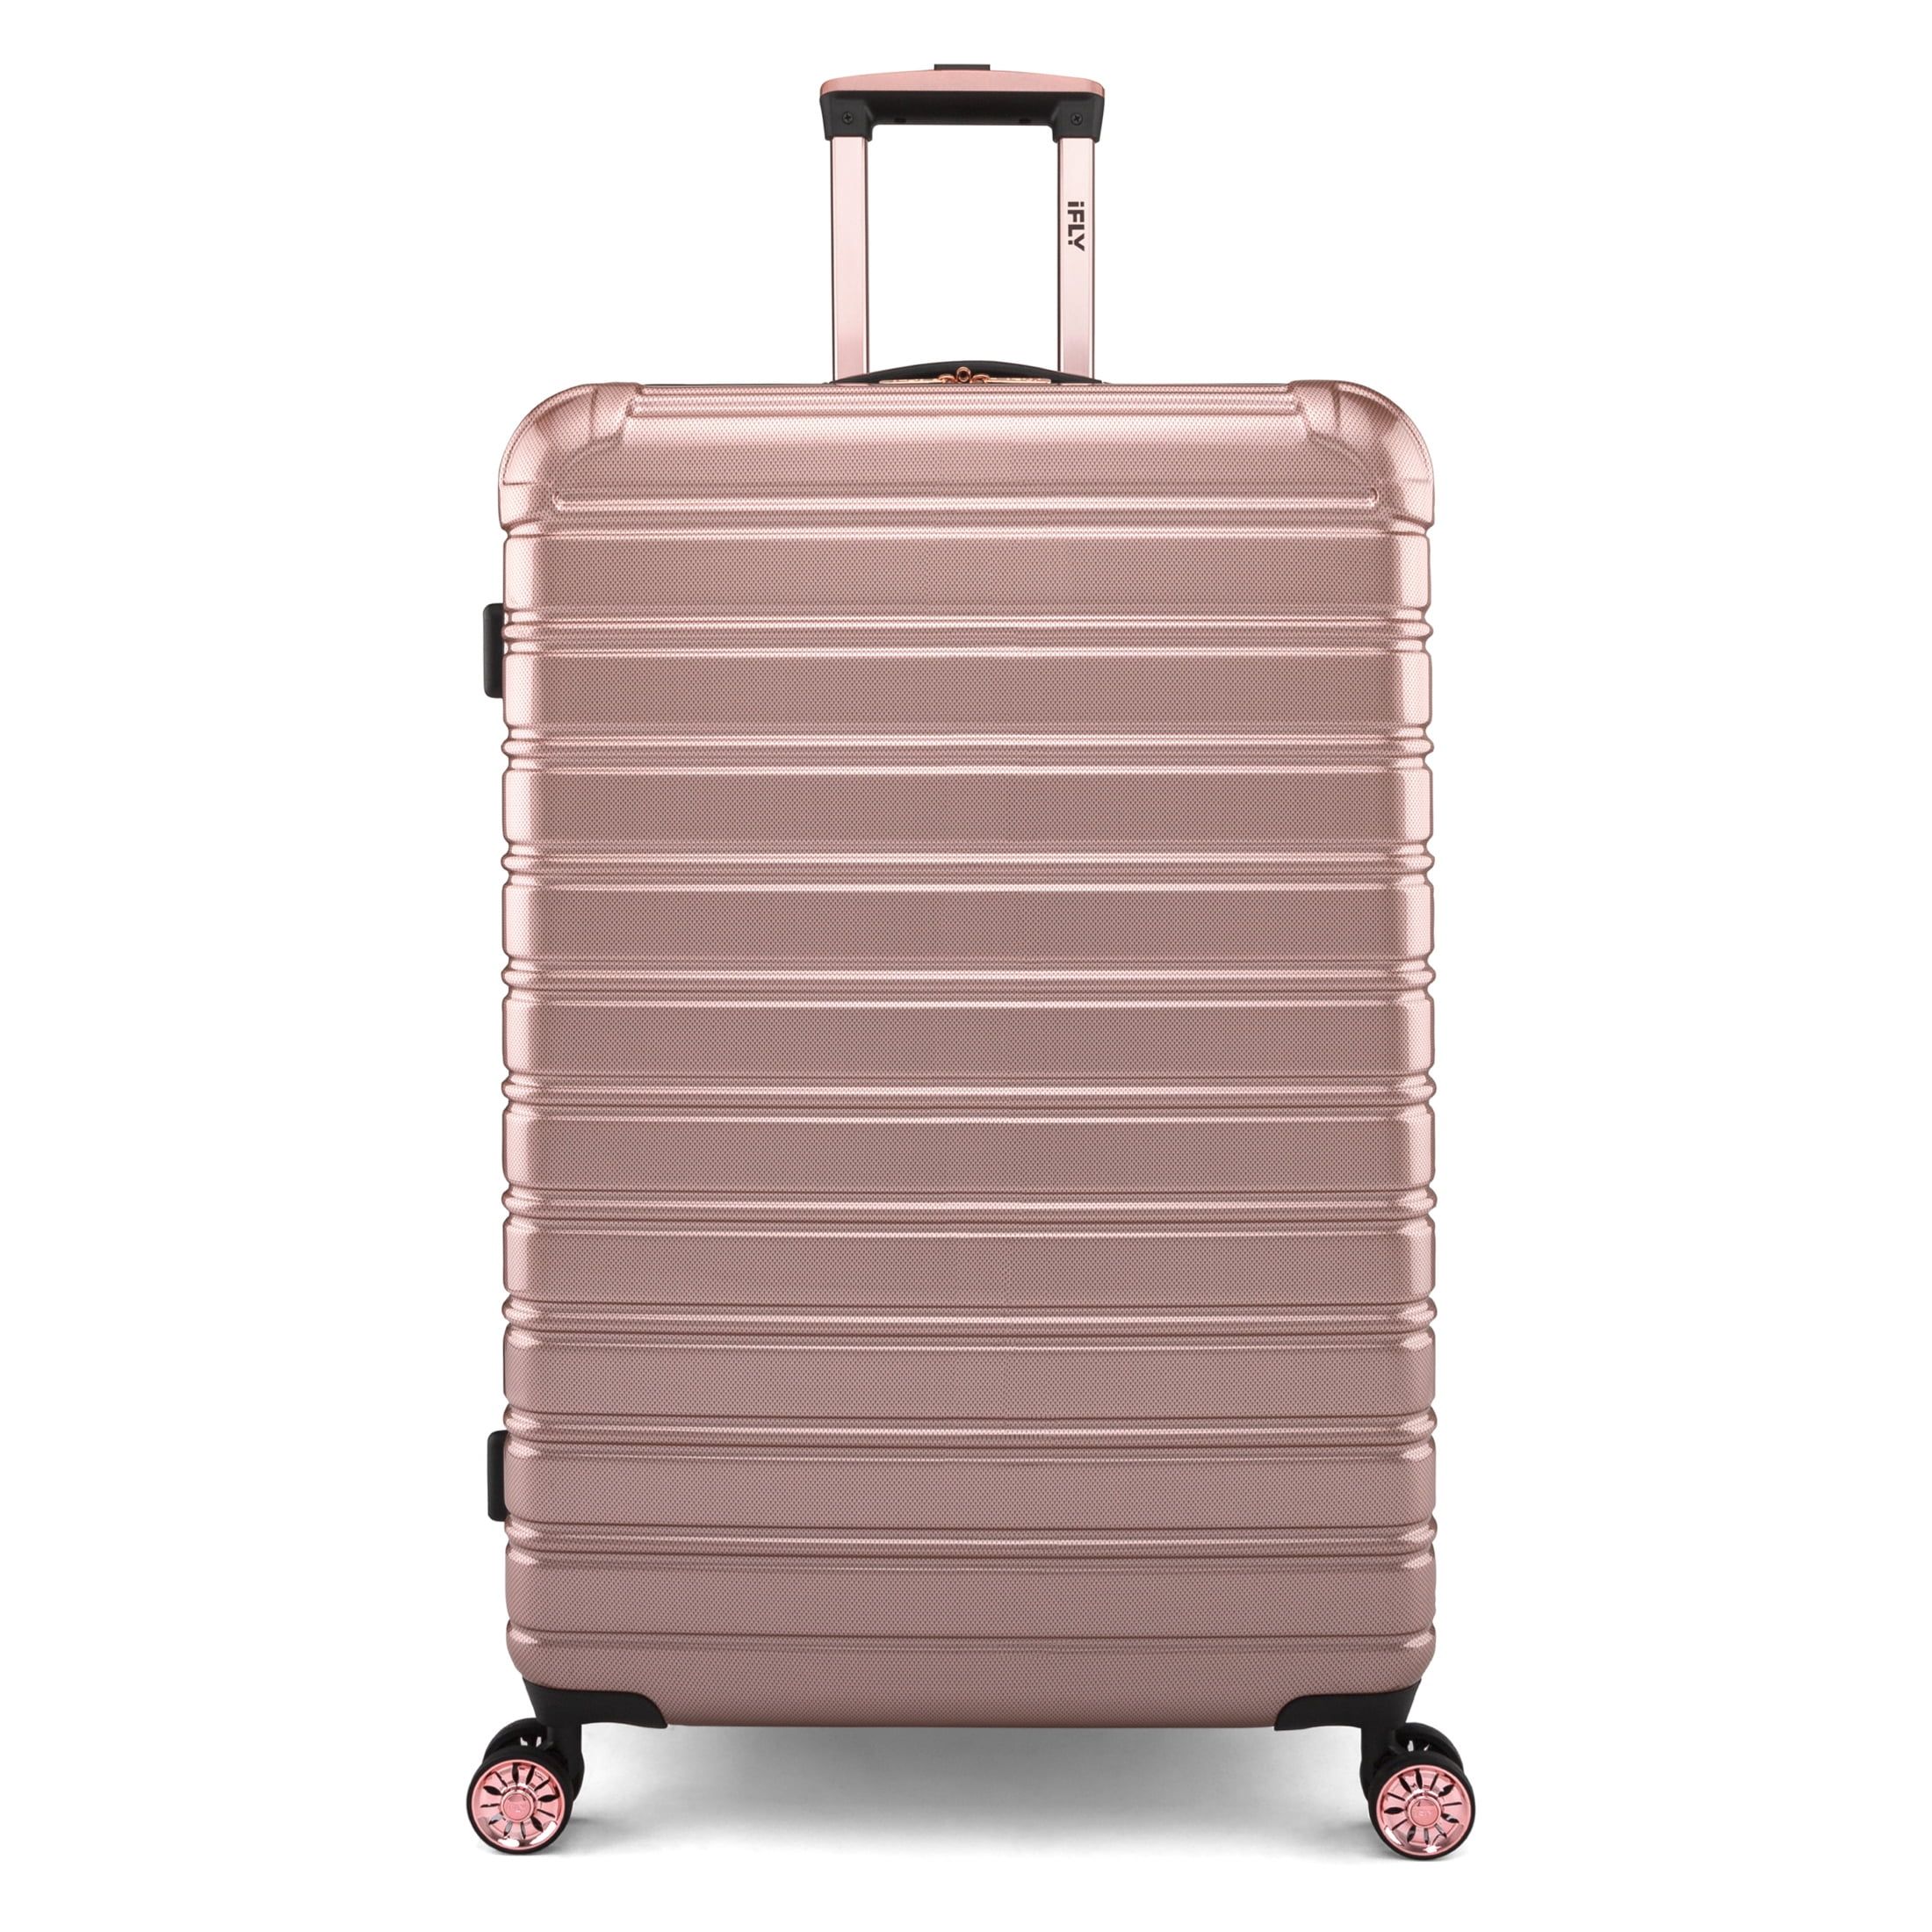 iFLY Hardside Fibertech Luggage 28" Checked Luggage, Rose Gold | Walmart (US)